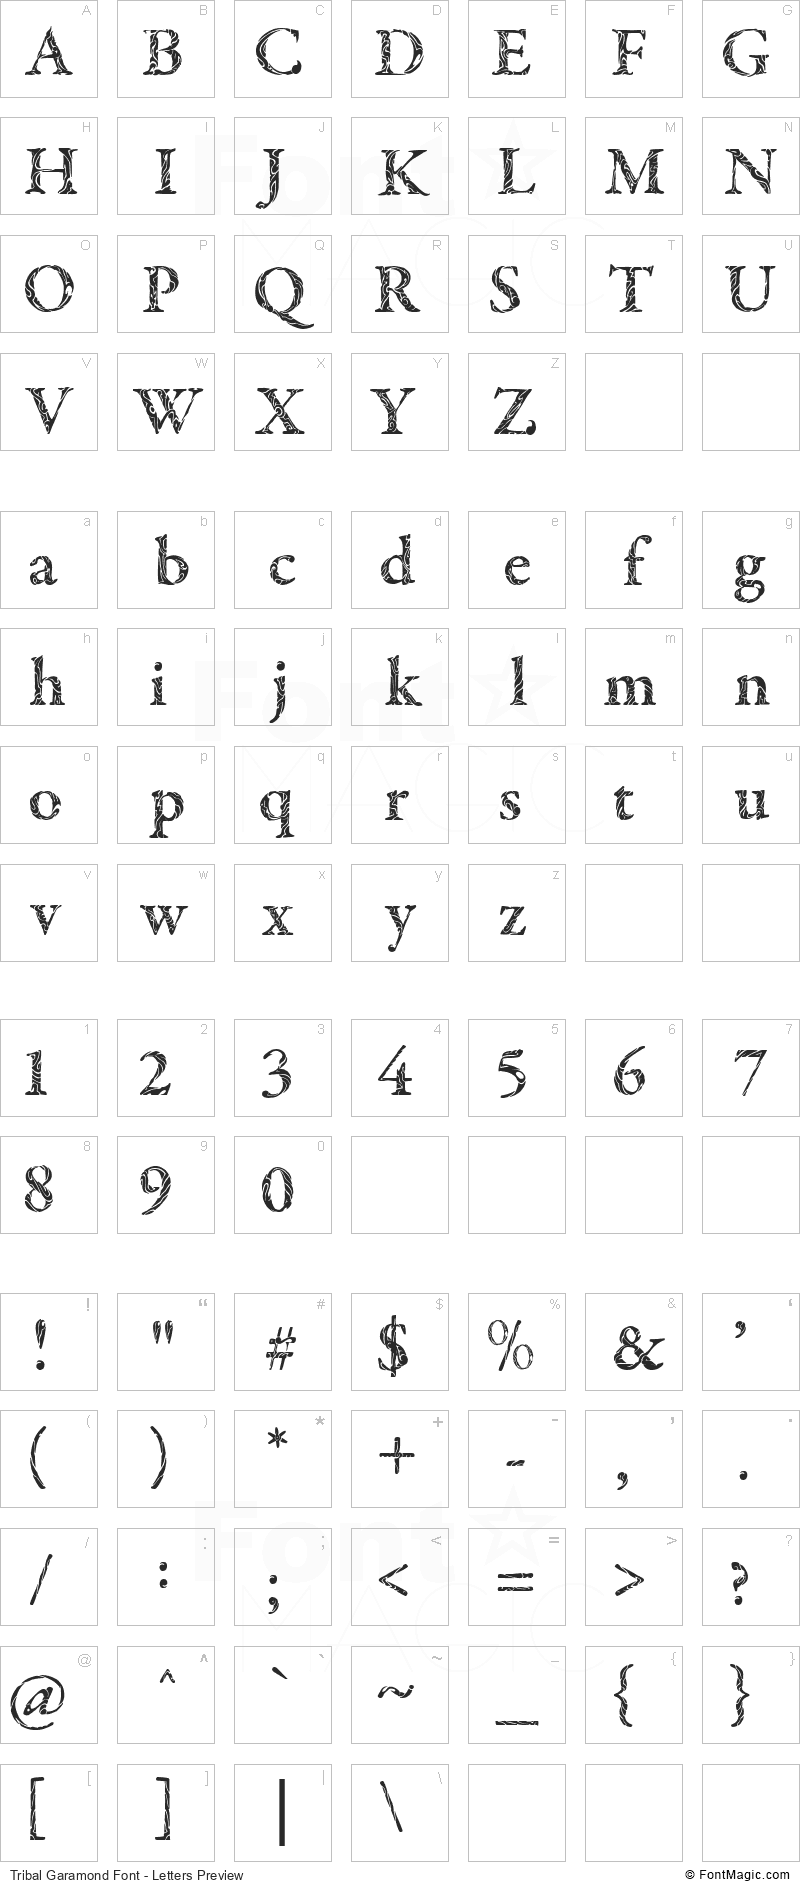 Tribal Garamond Font - All Latters Preview Chart